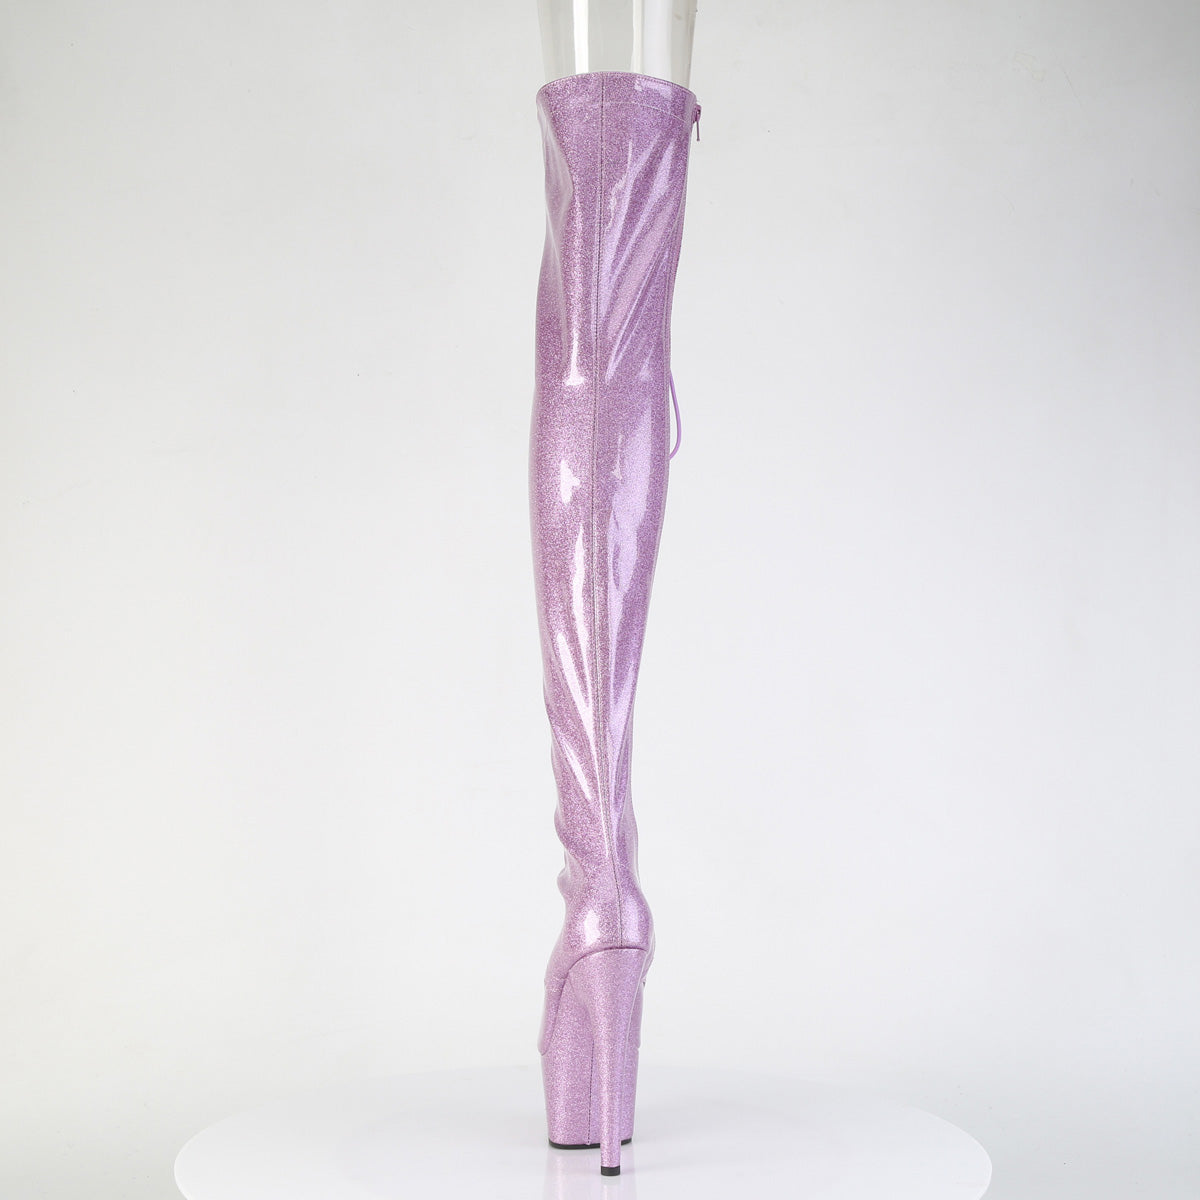 7 Inch Heel ADORE-3021GP Lilac Glitter